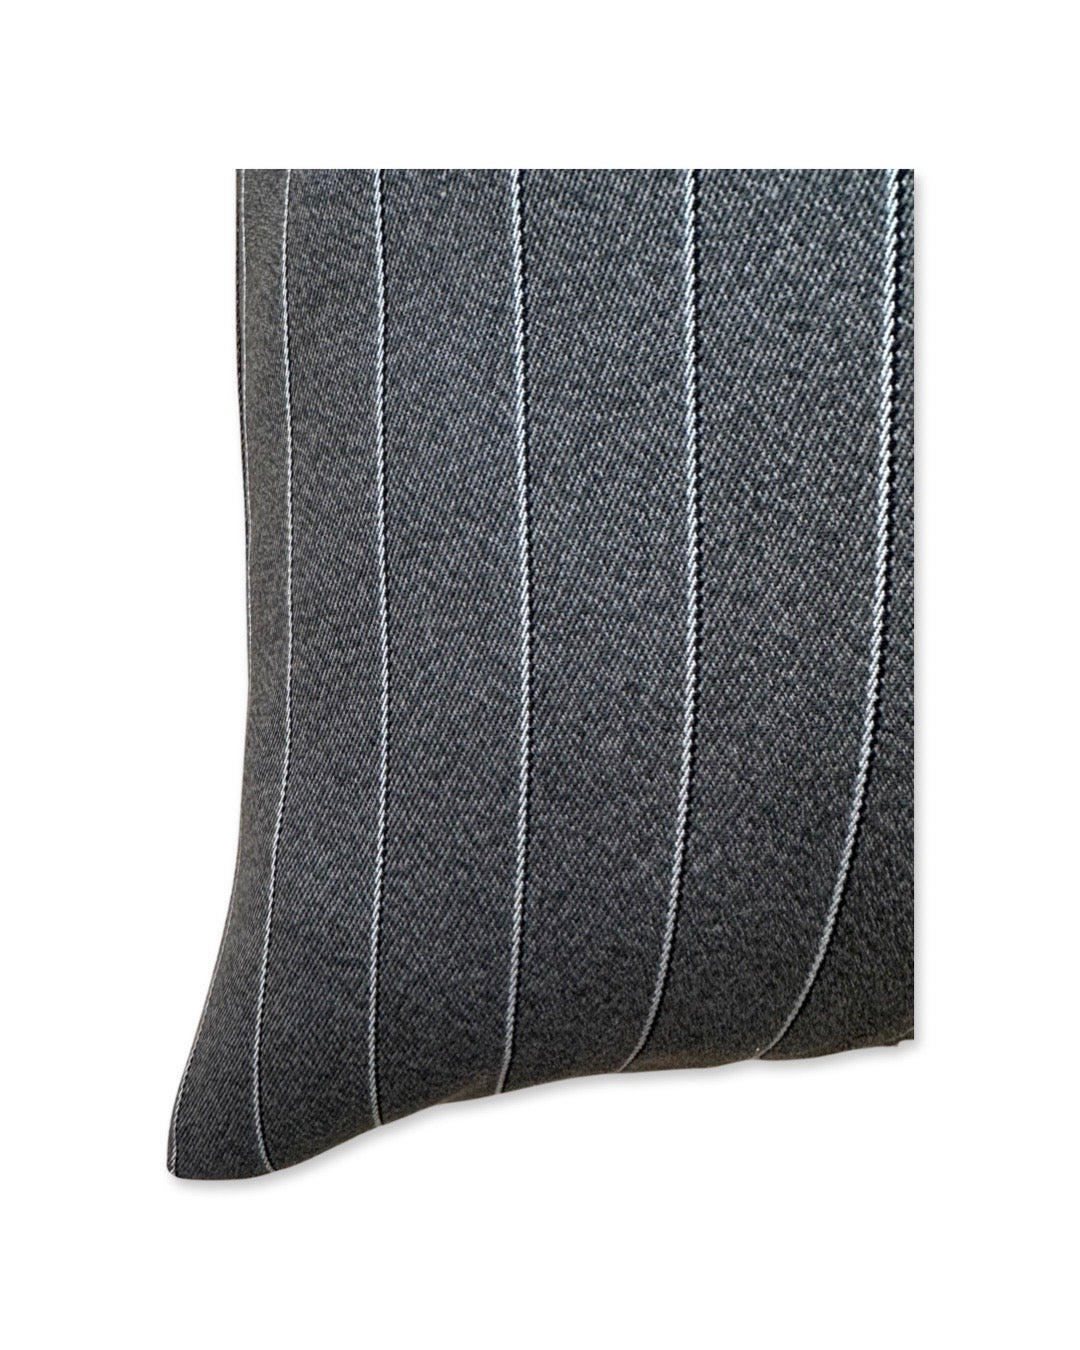 Pinstripe Charcoal Cushion